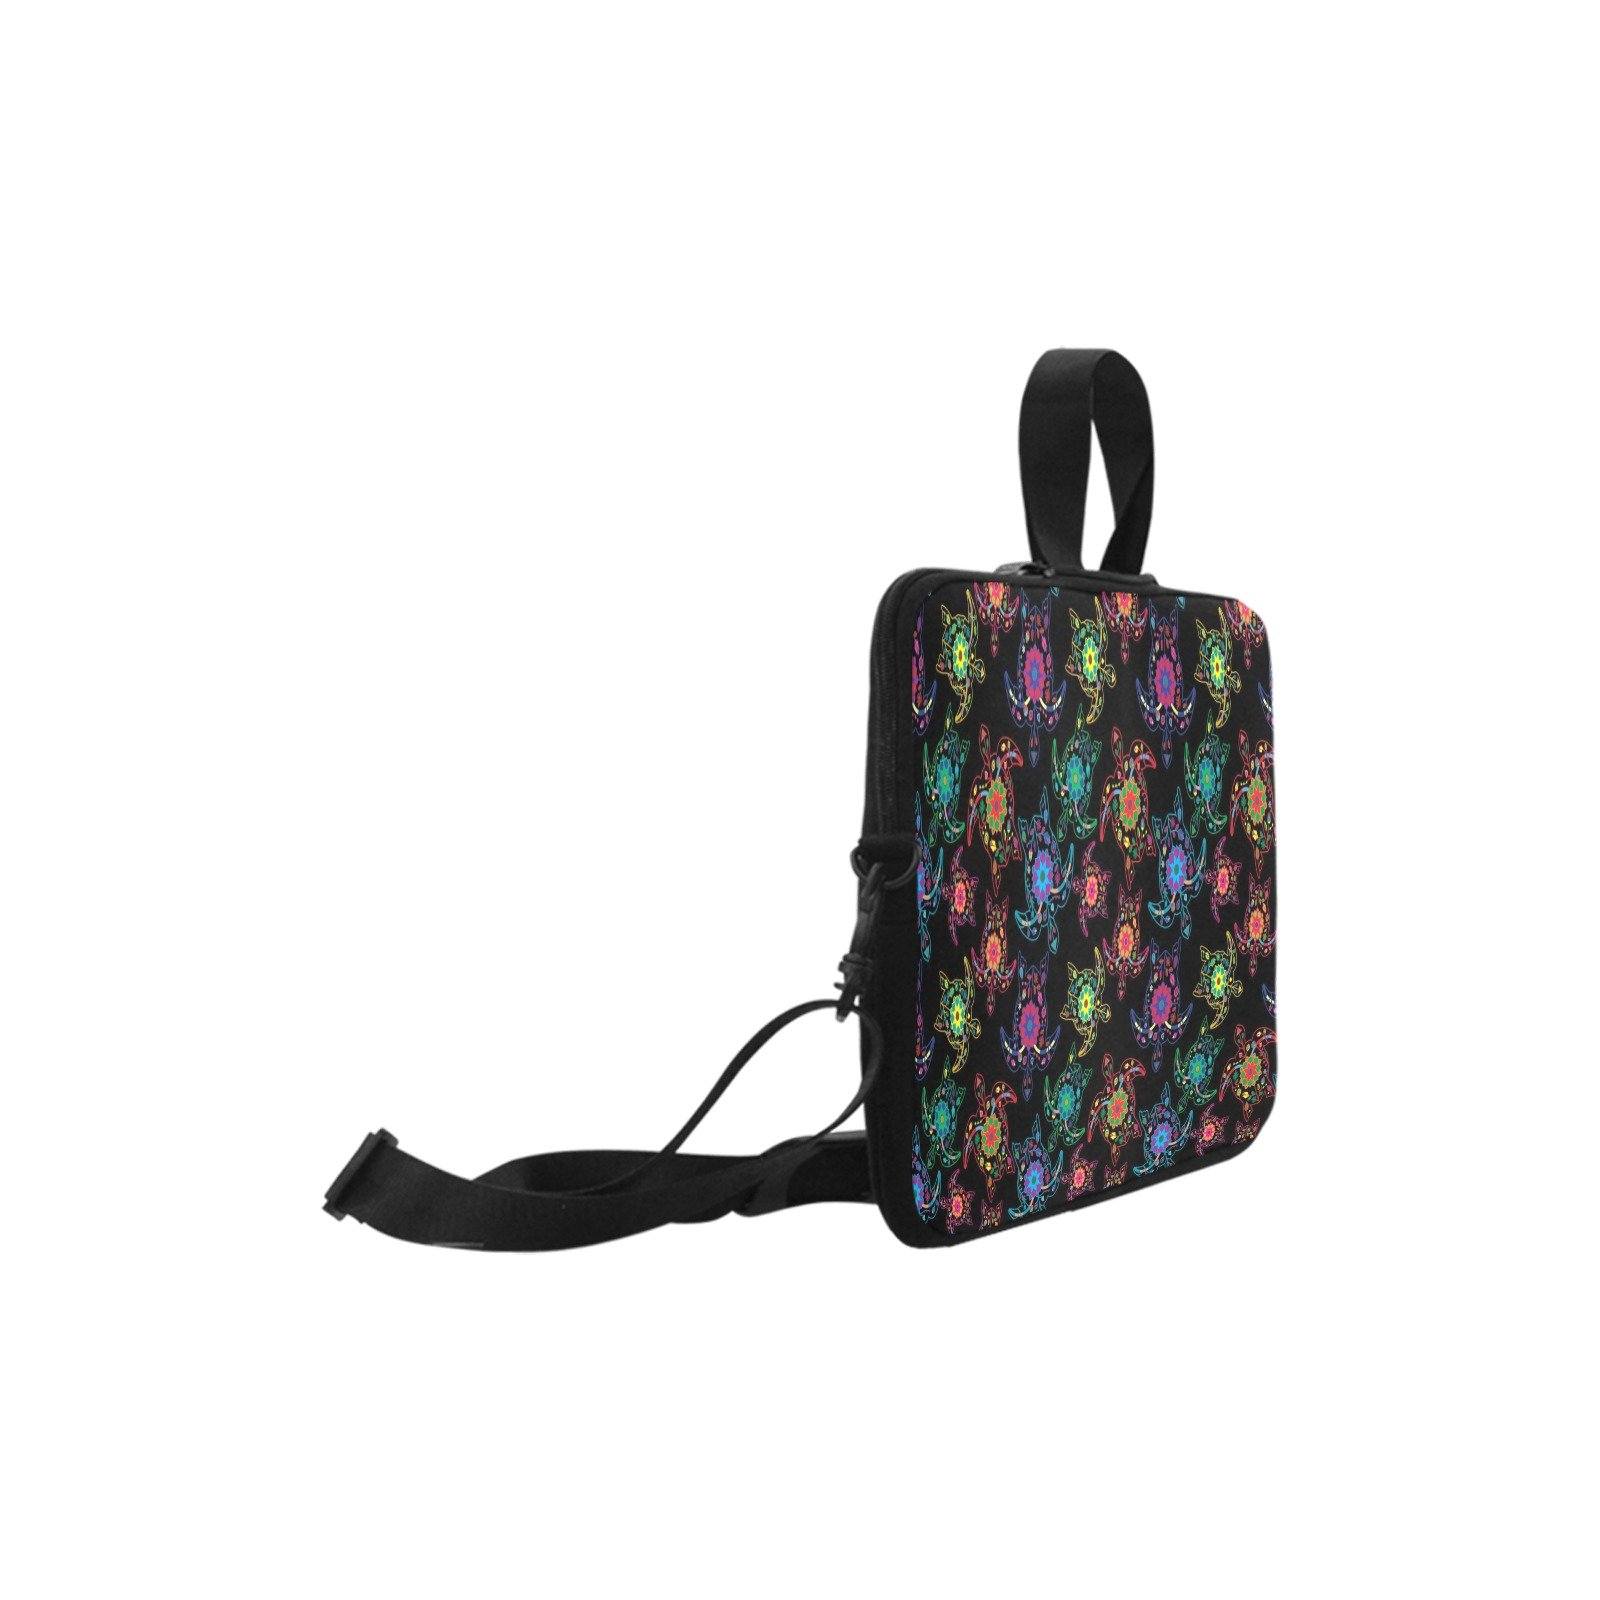 Floral Turtle Laptop Handbags 14" bag e-joyer 